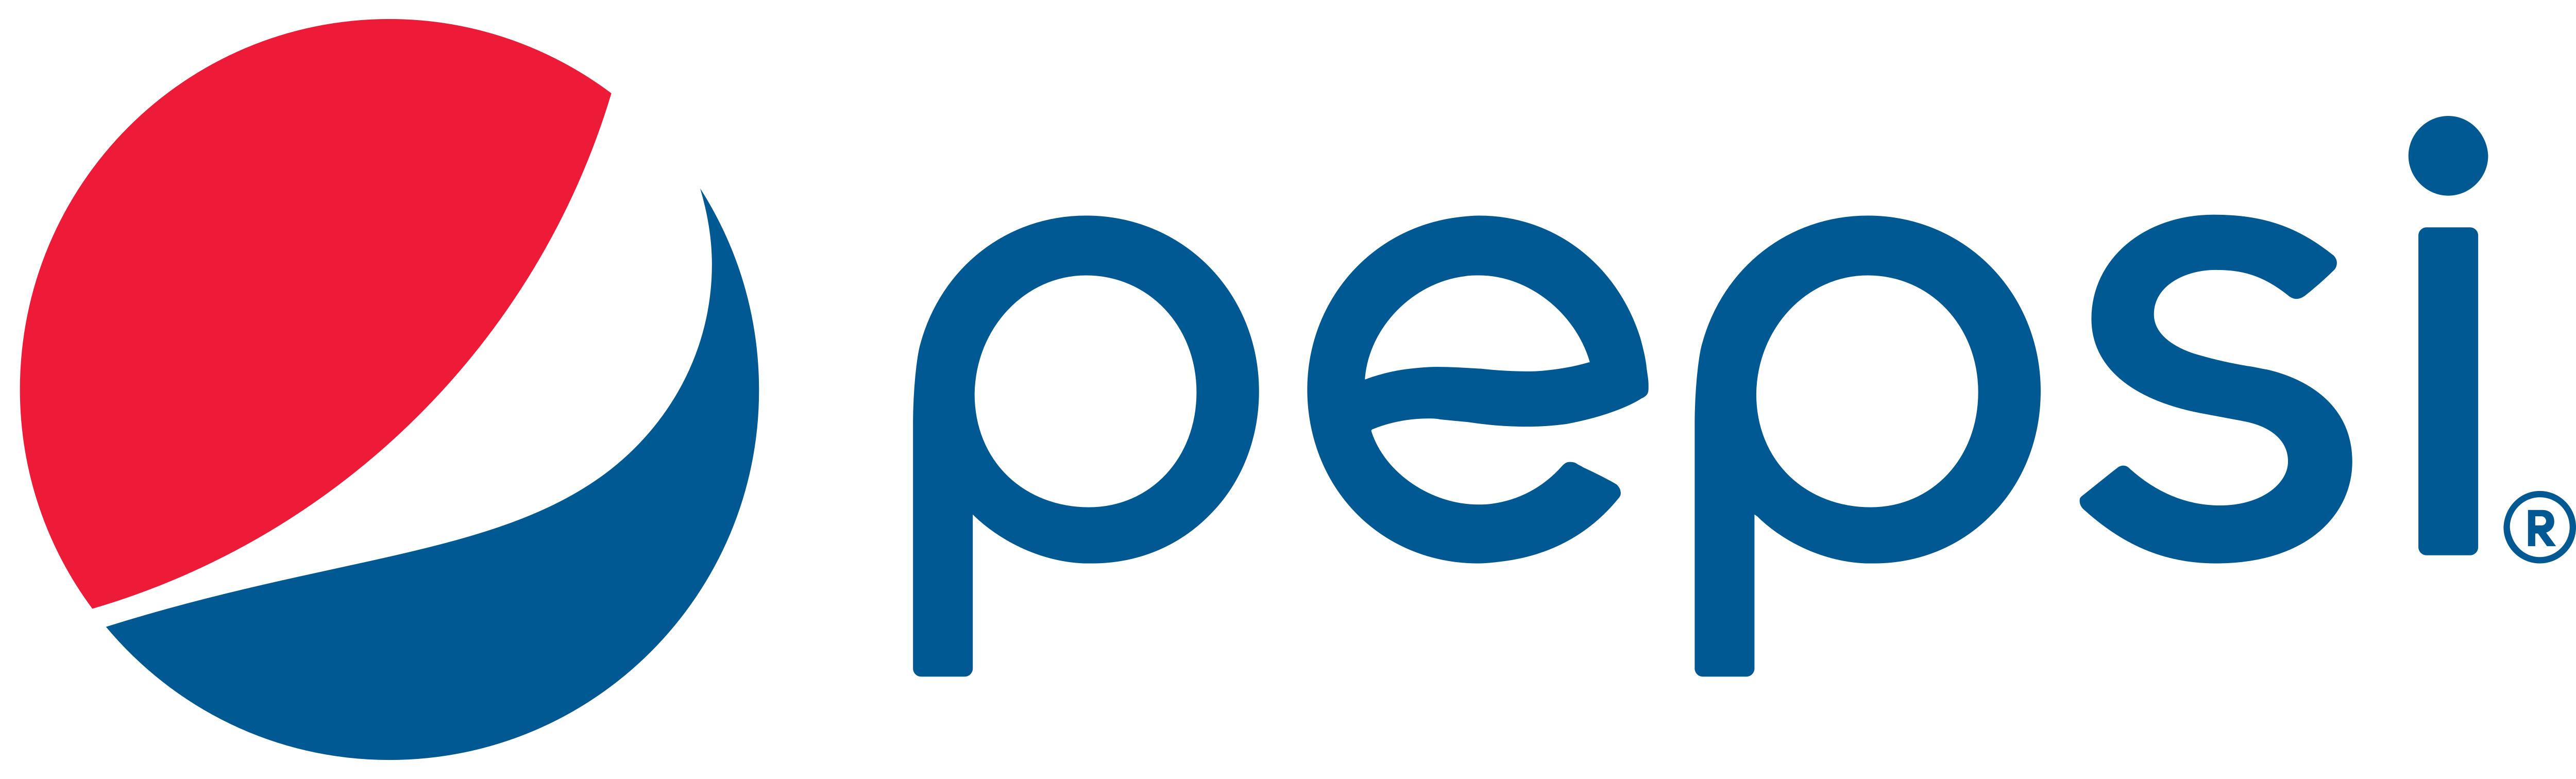 Pepsi_Logo_2014